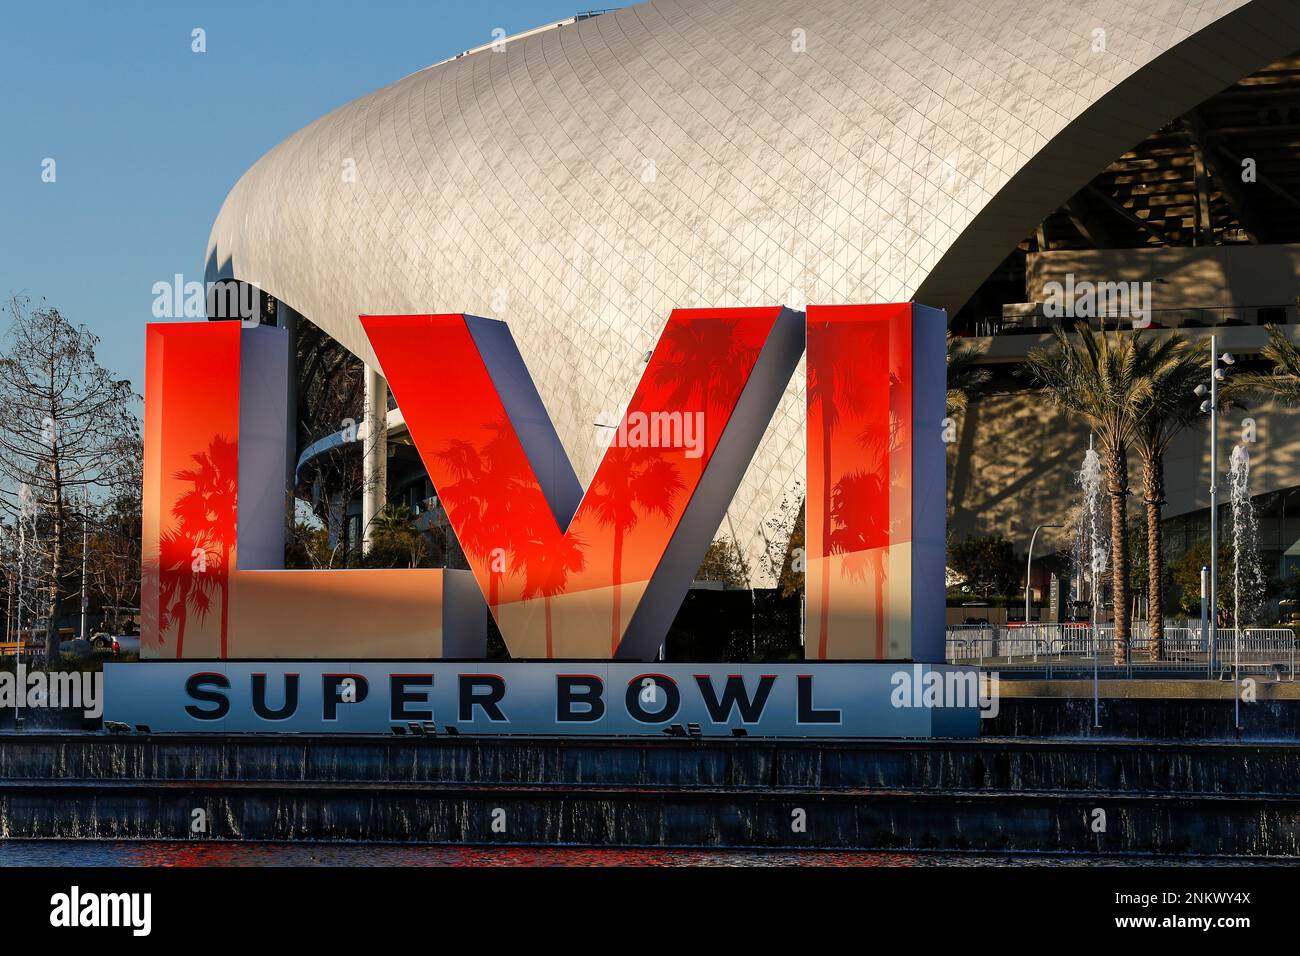 INGLEWOOD, CA - FEBRUARY 07: A general view of Super Bowl LVI logo